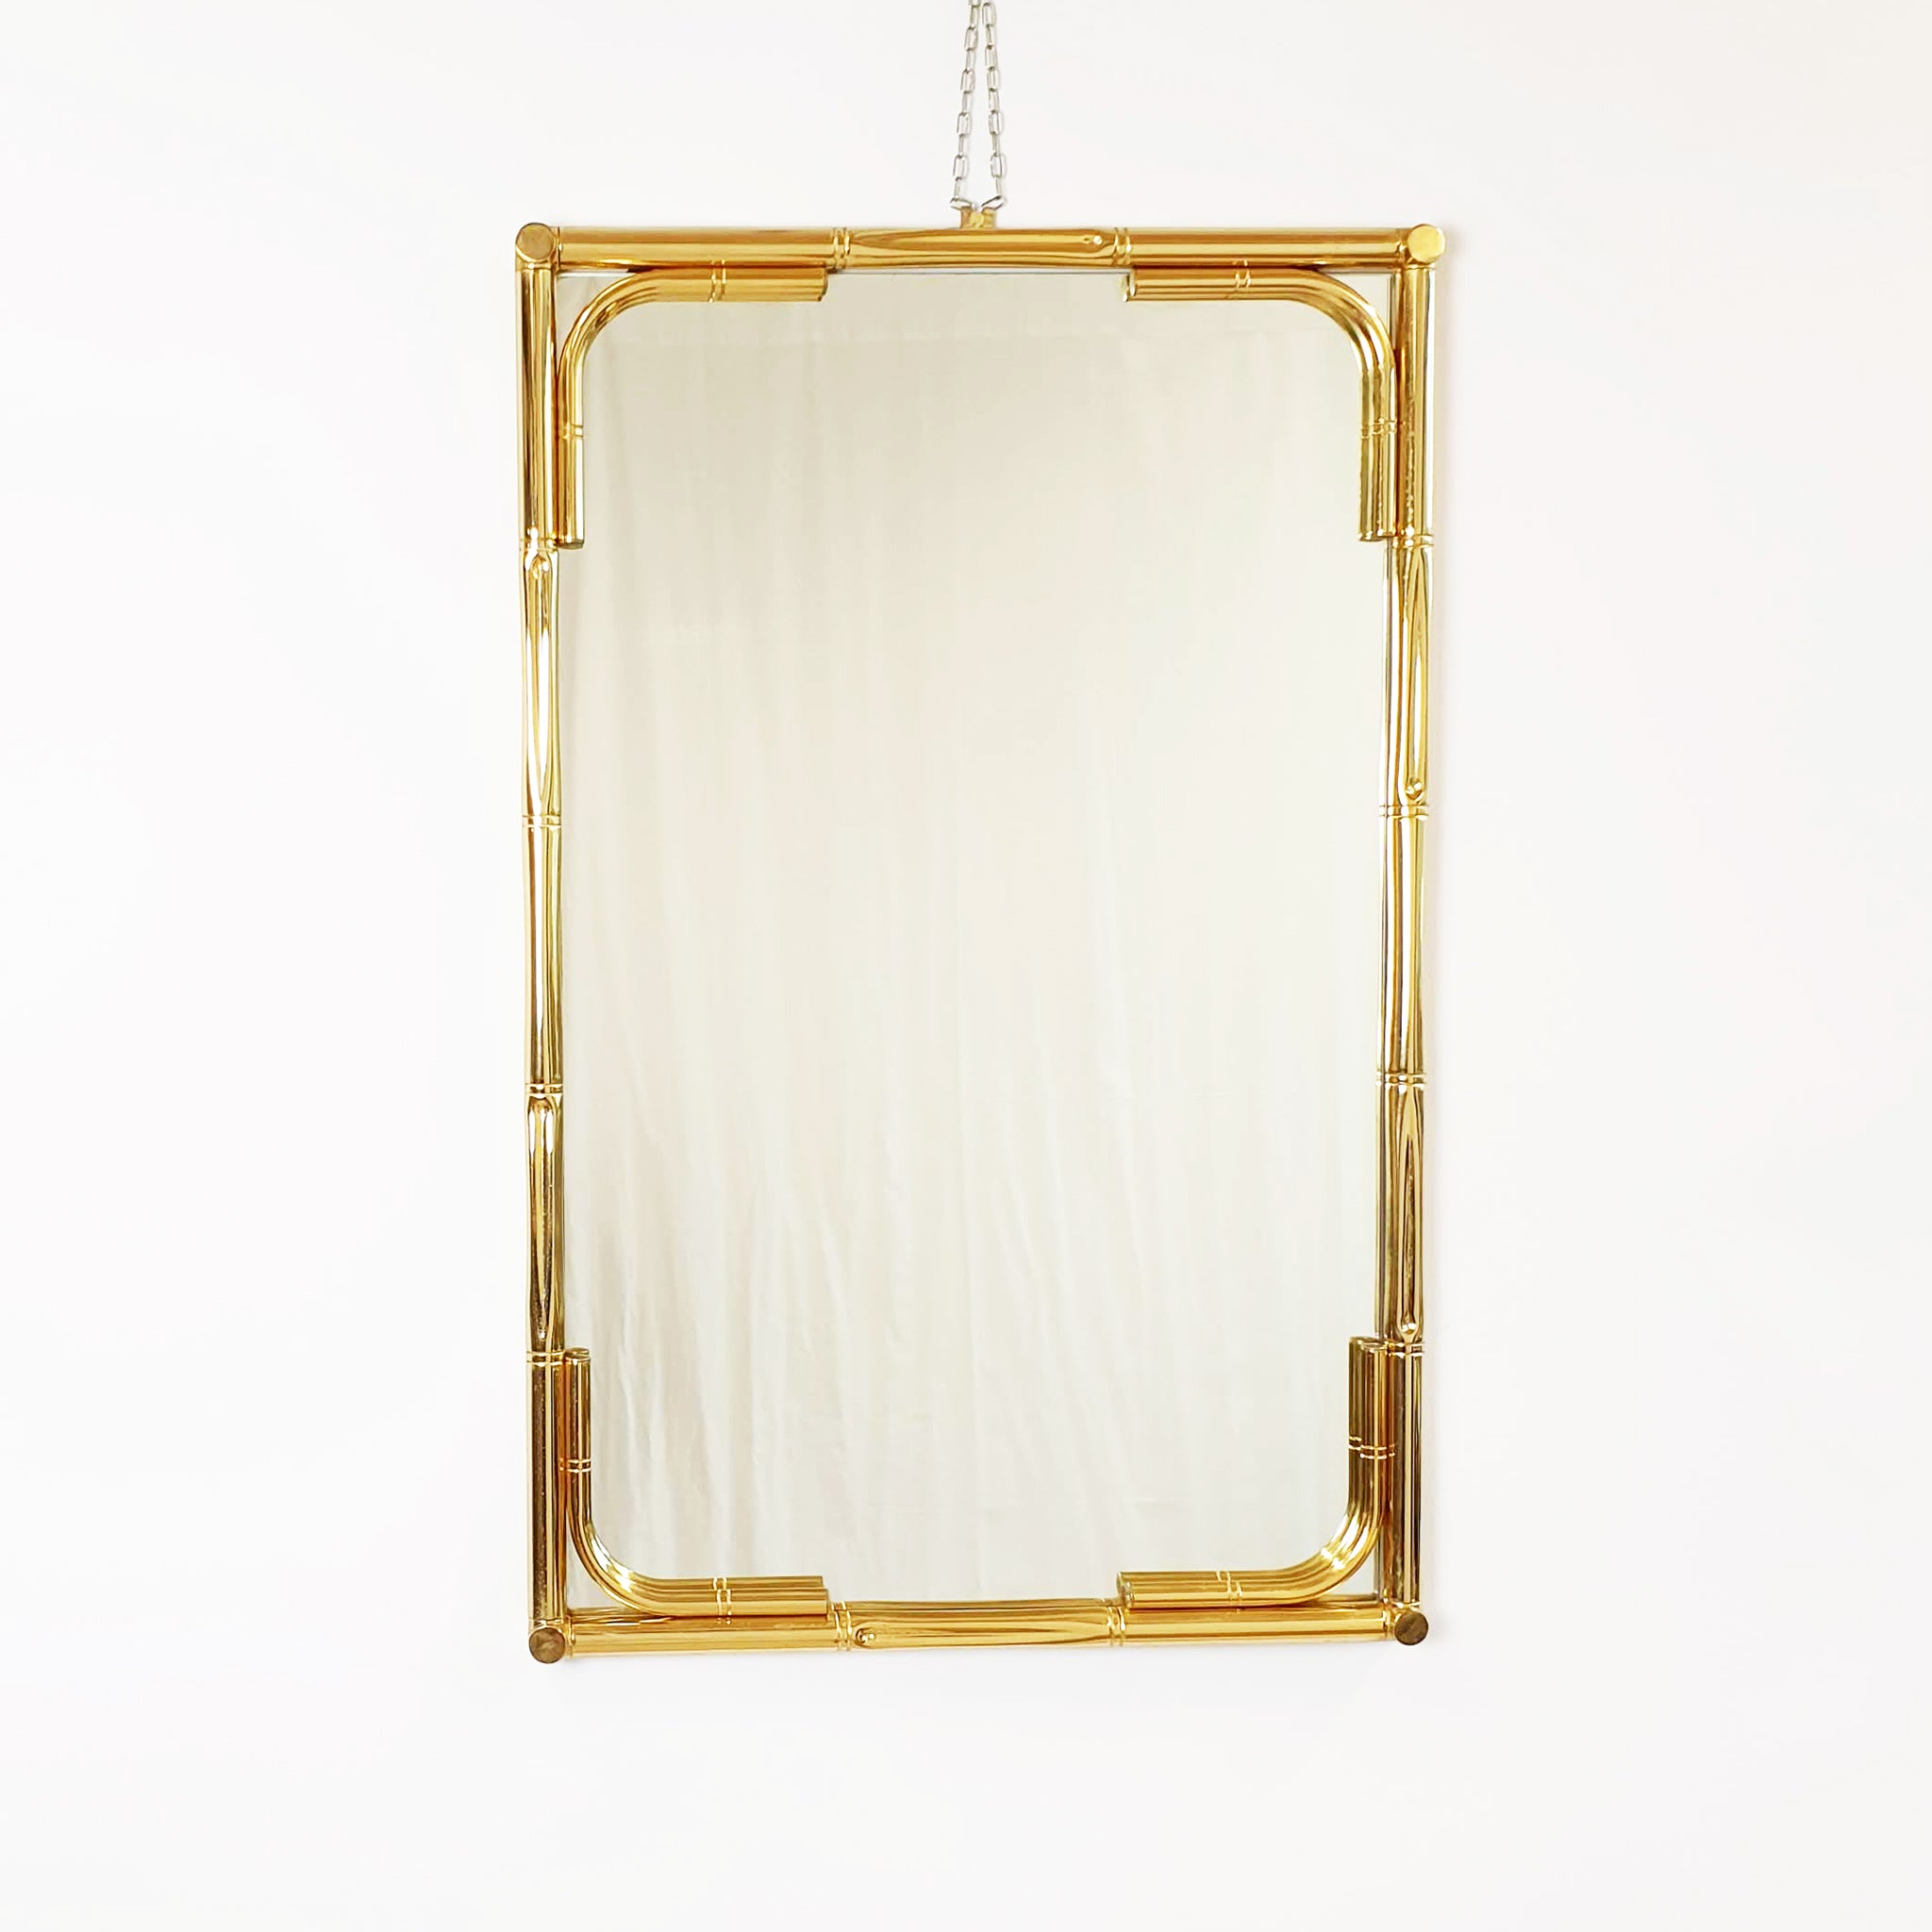 1970s Italian gilded faux bamboo mirror